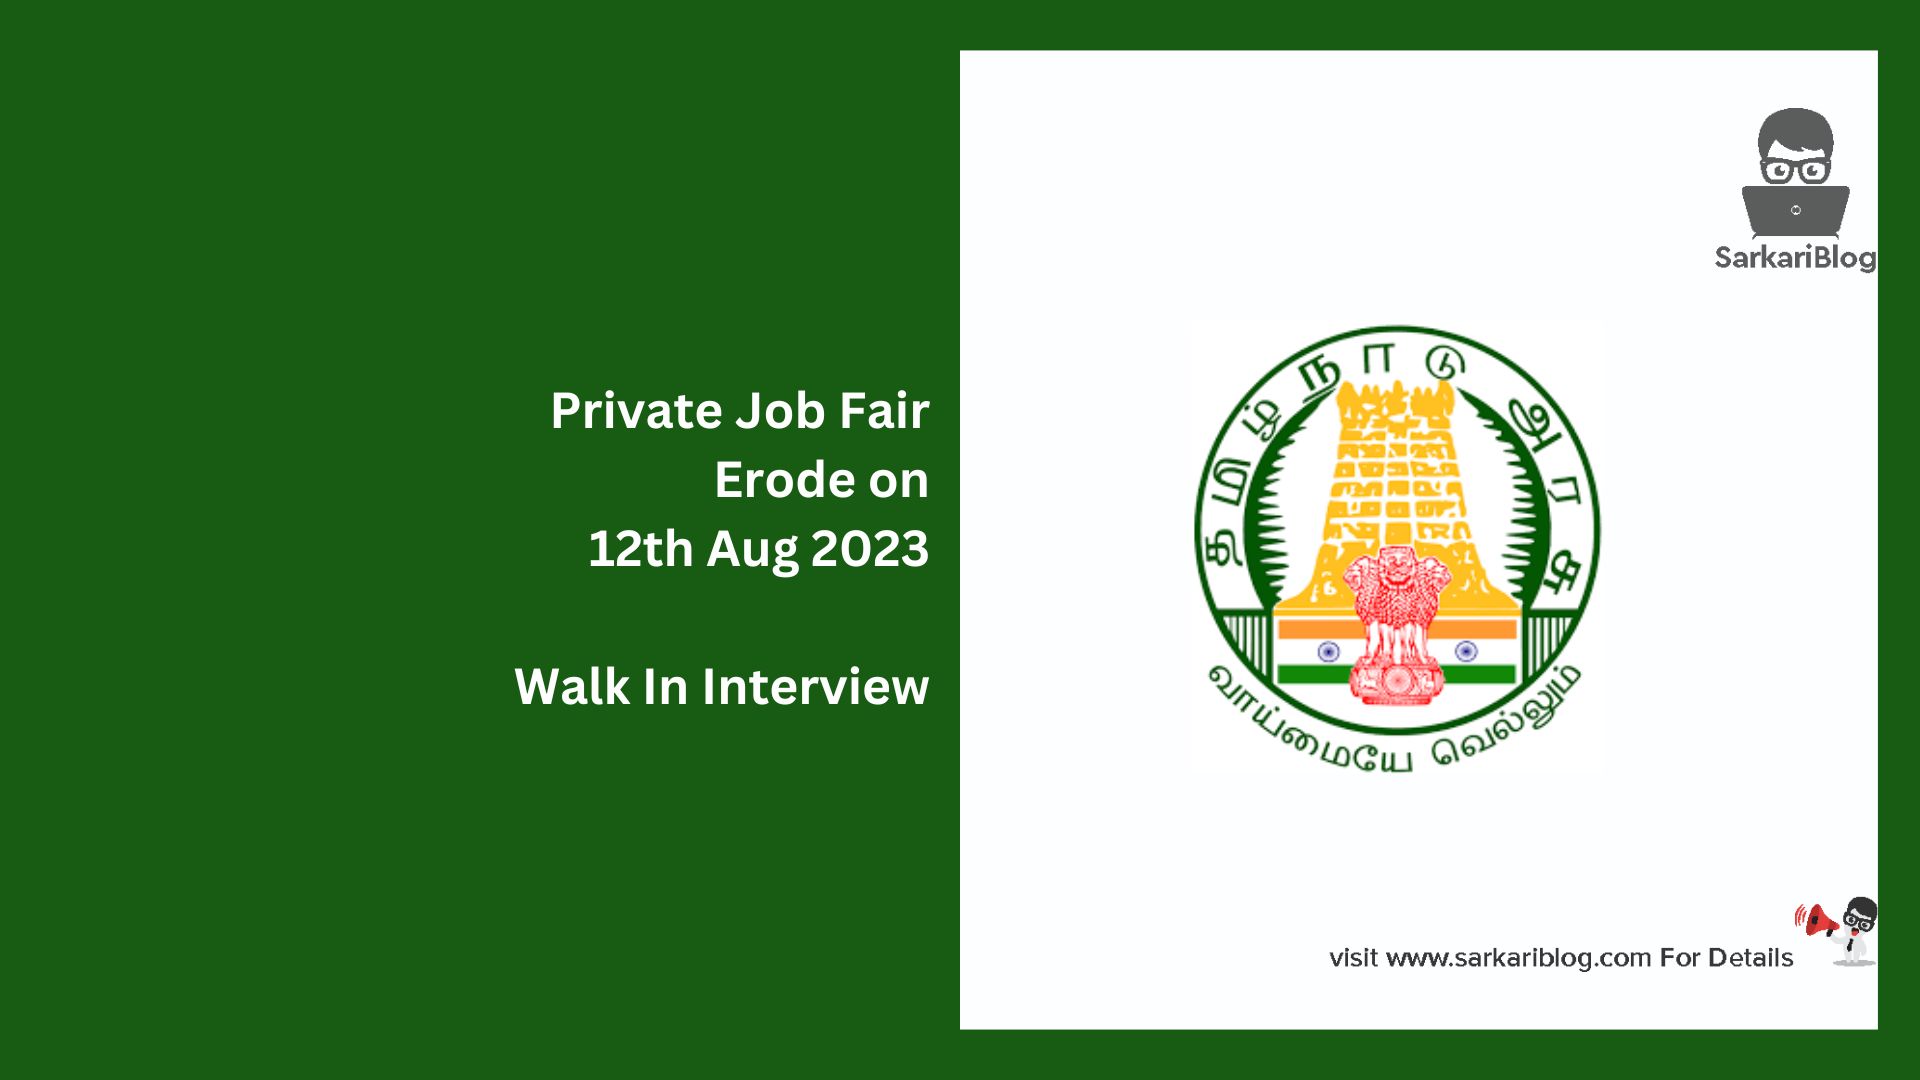 Private Job Fair Erode on 12th Aug 2023